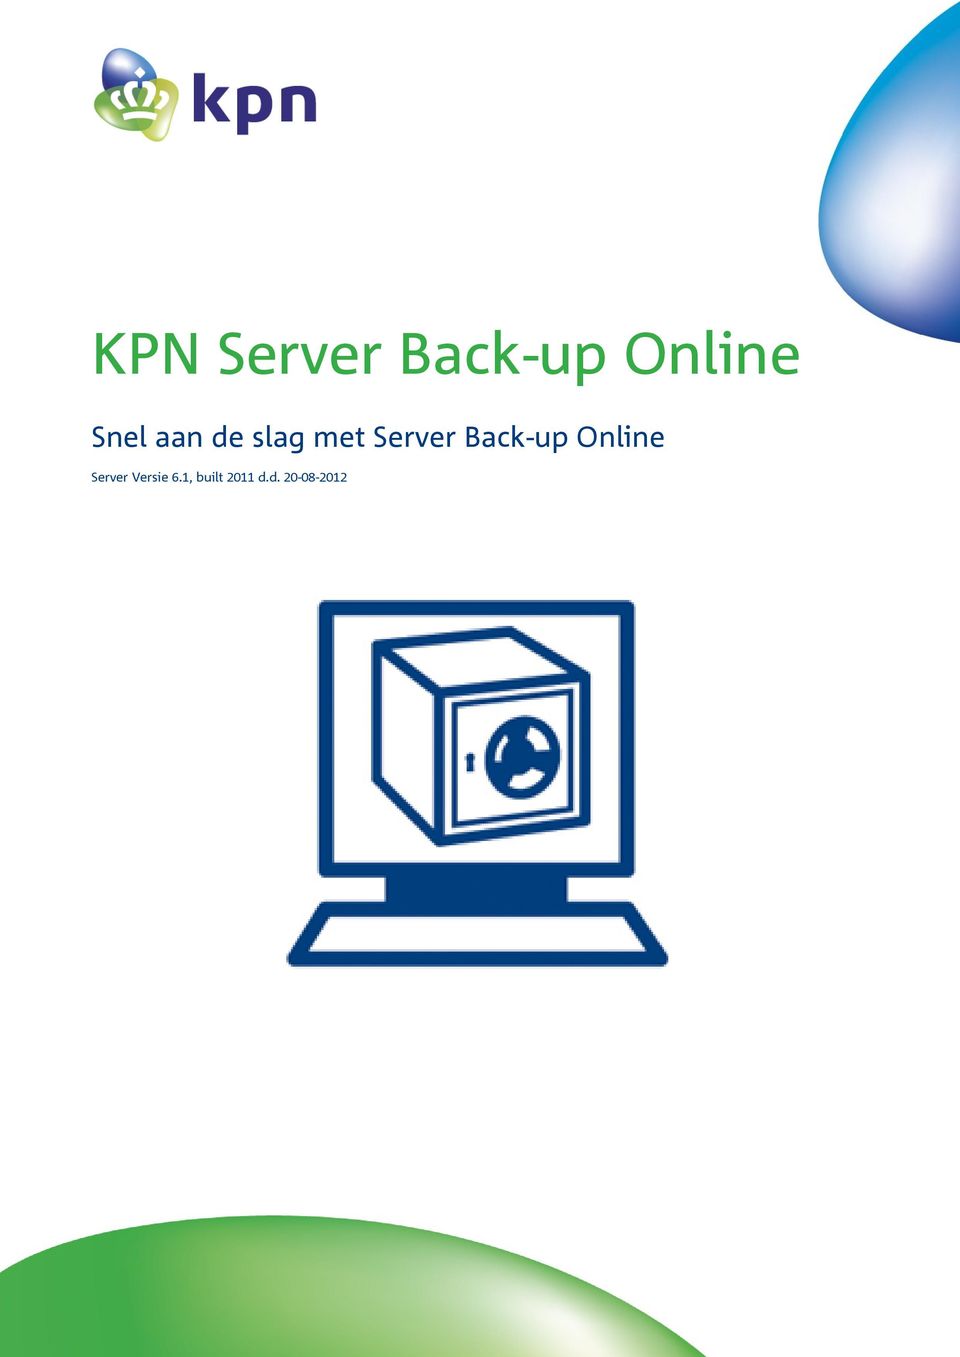 Back-up Online Server Versie